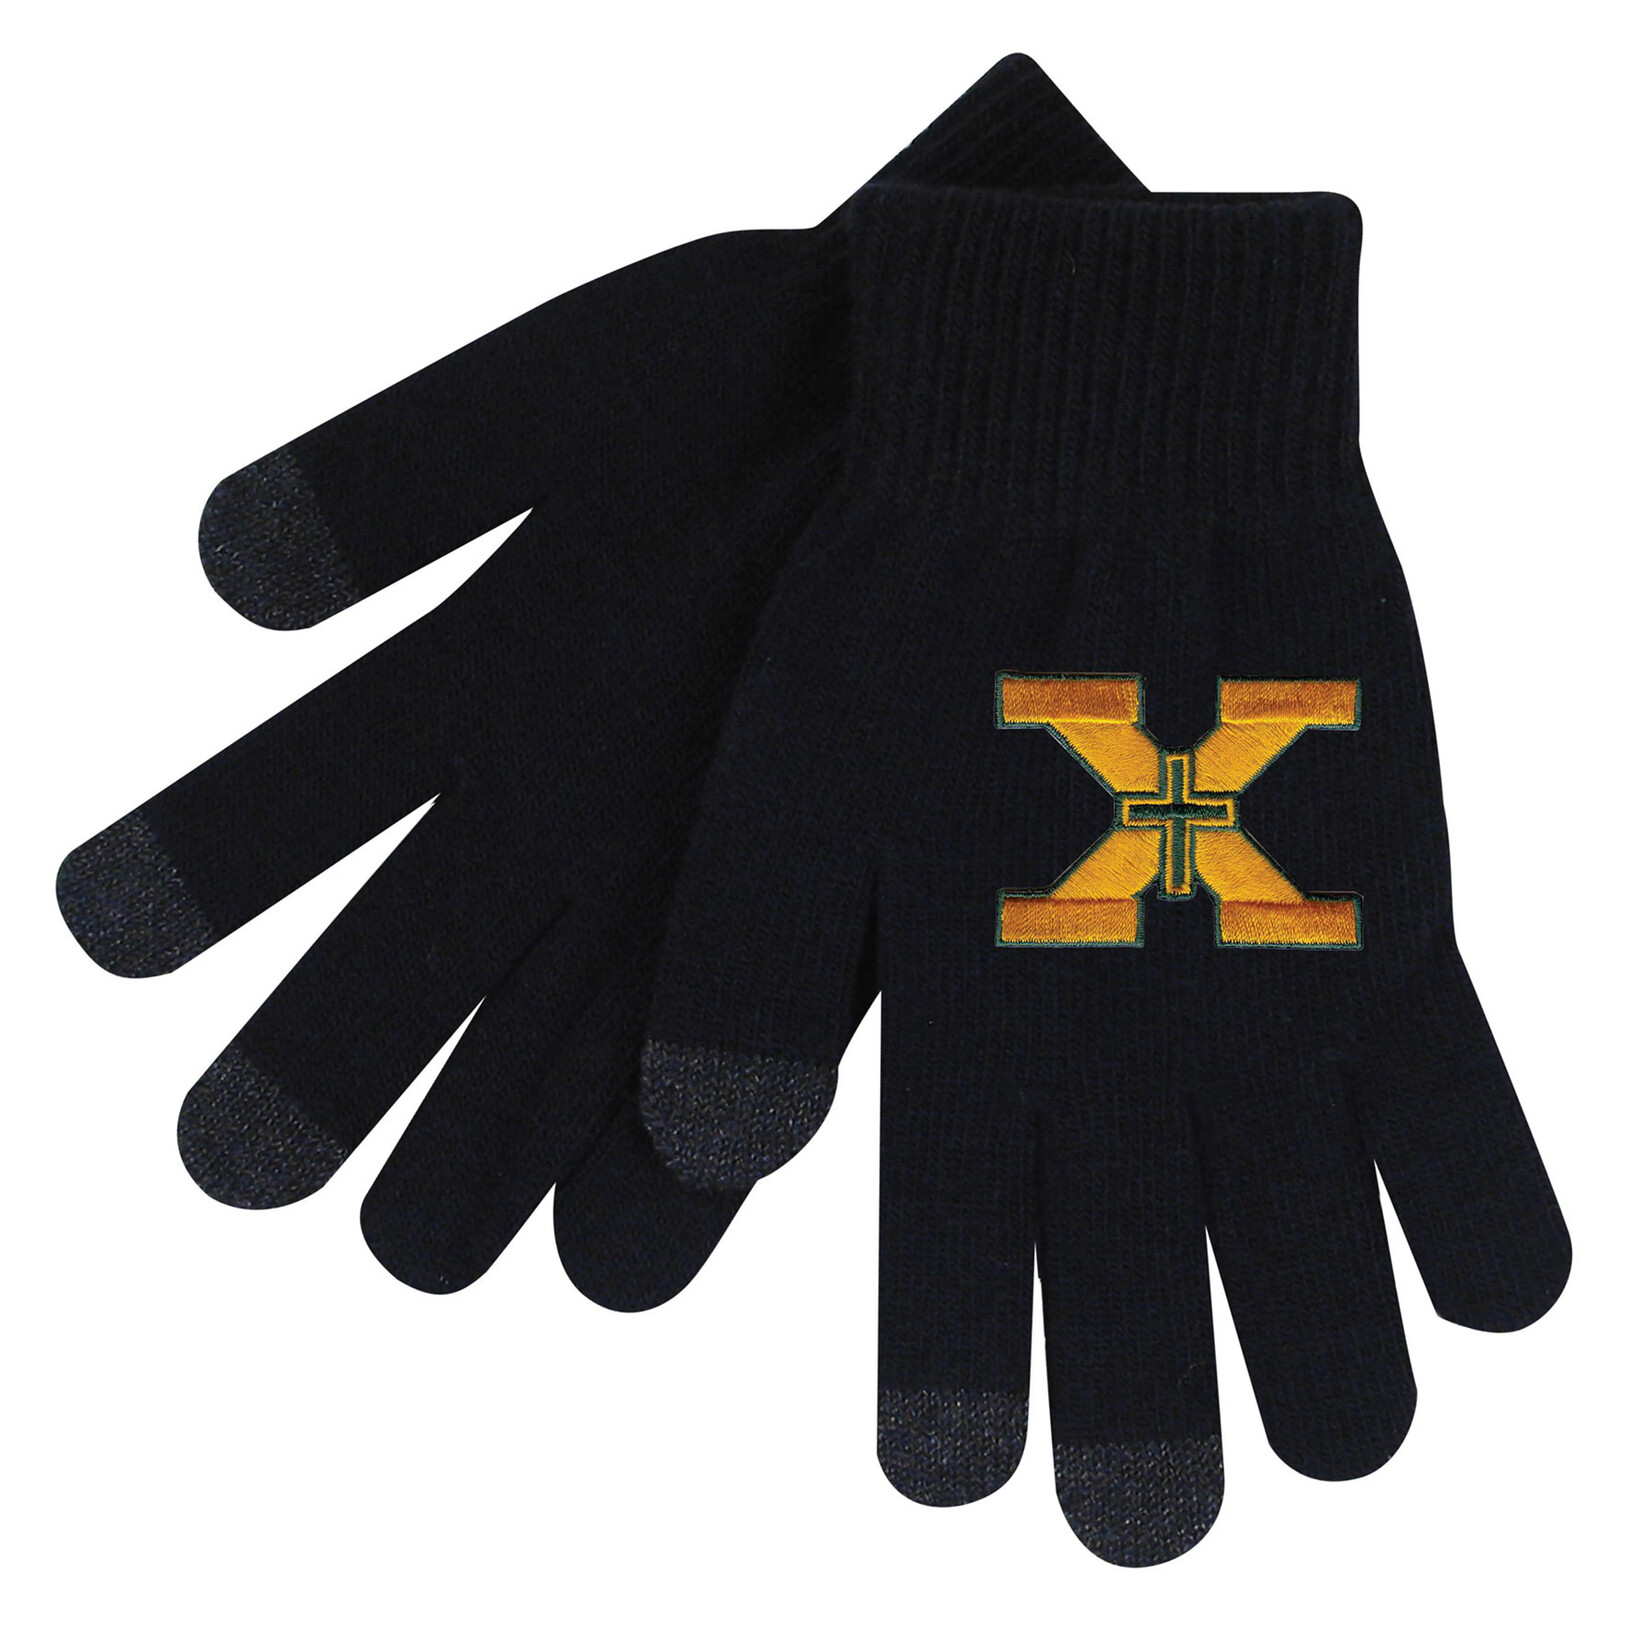 Knit texting gloves Black